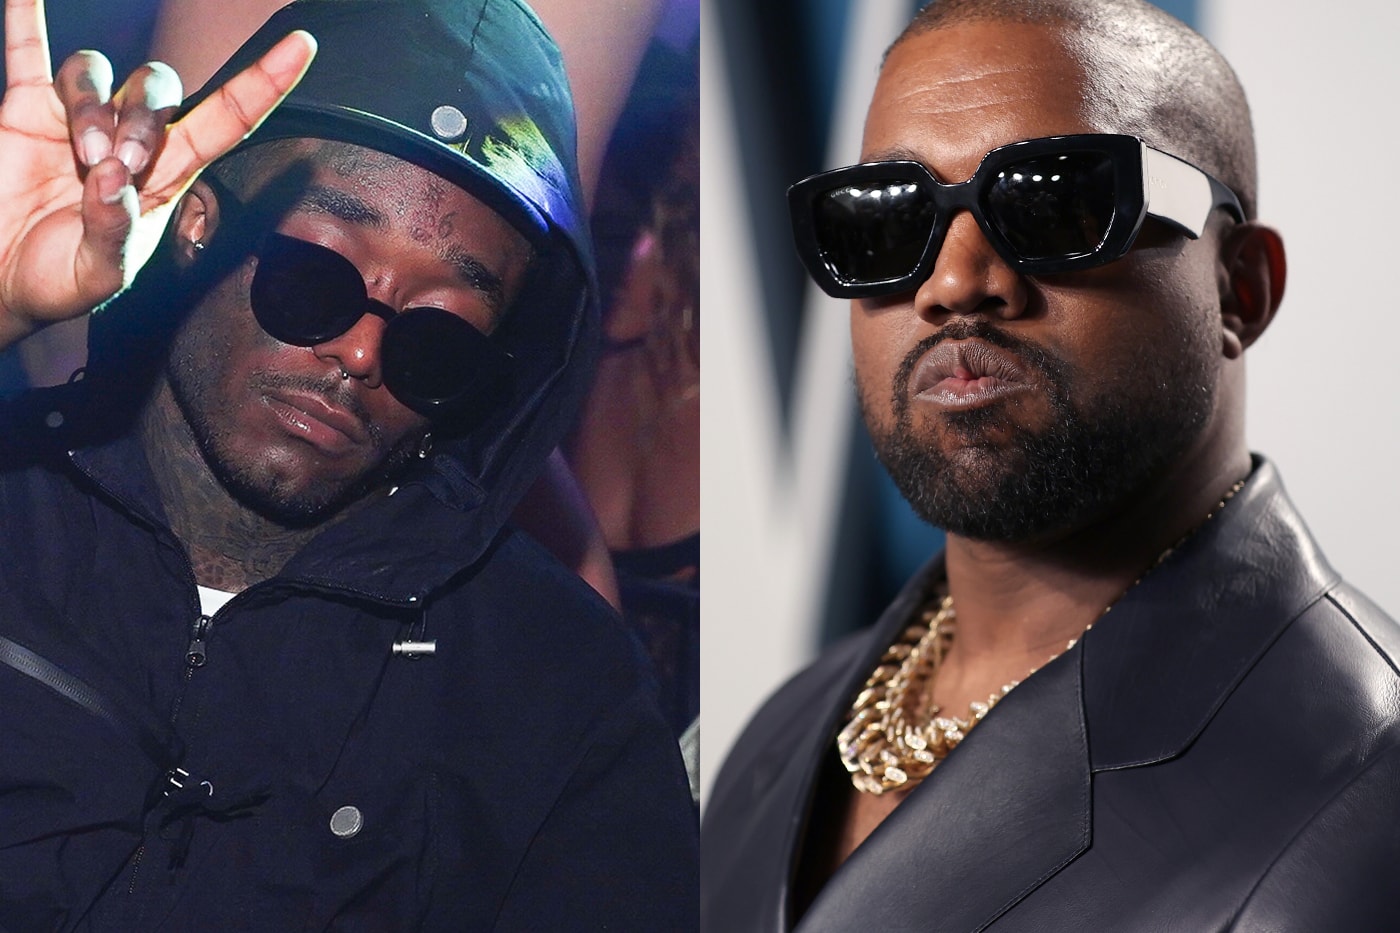 Lil Uzi Vert Calls Kanye a Fake Pastor Potential Feud Info